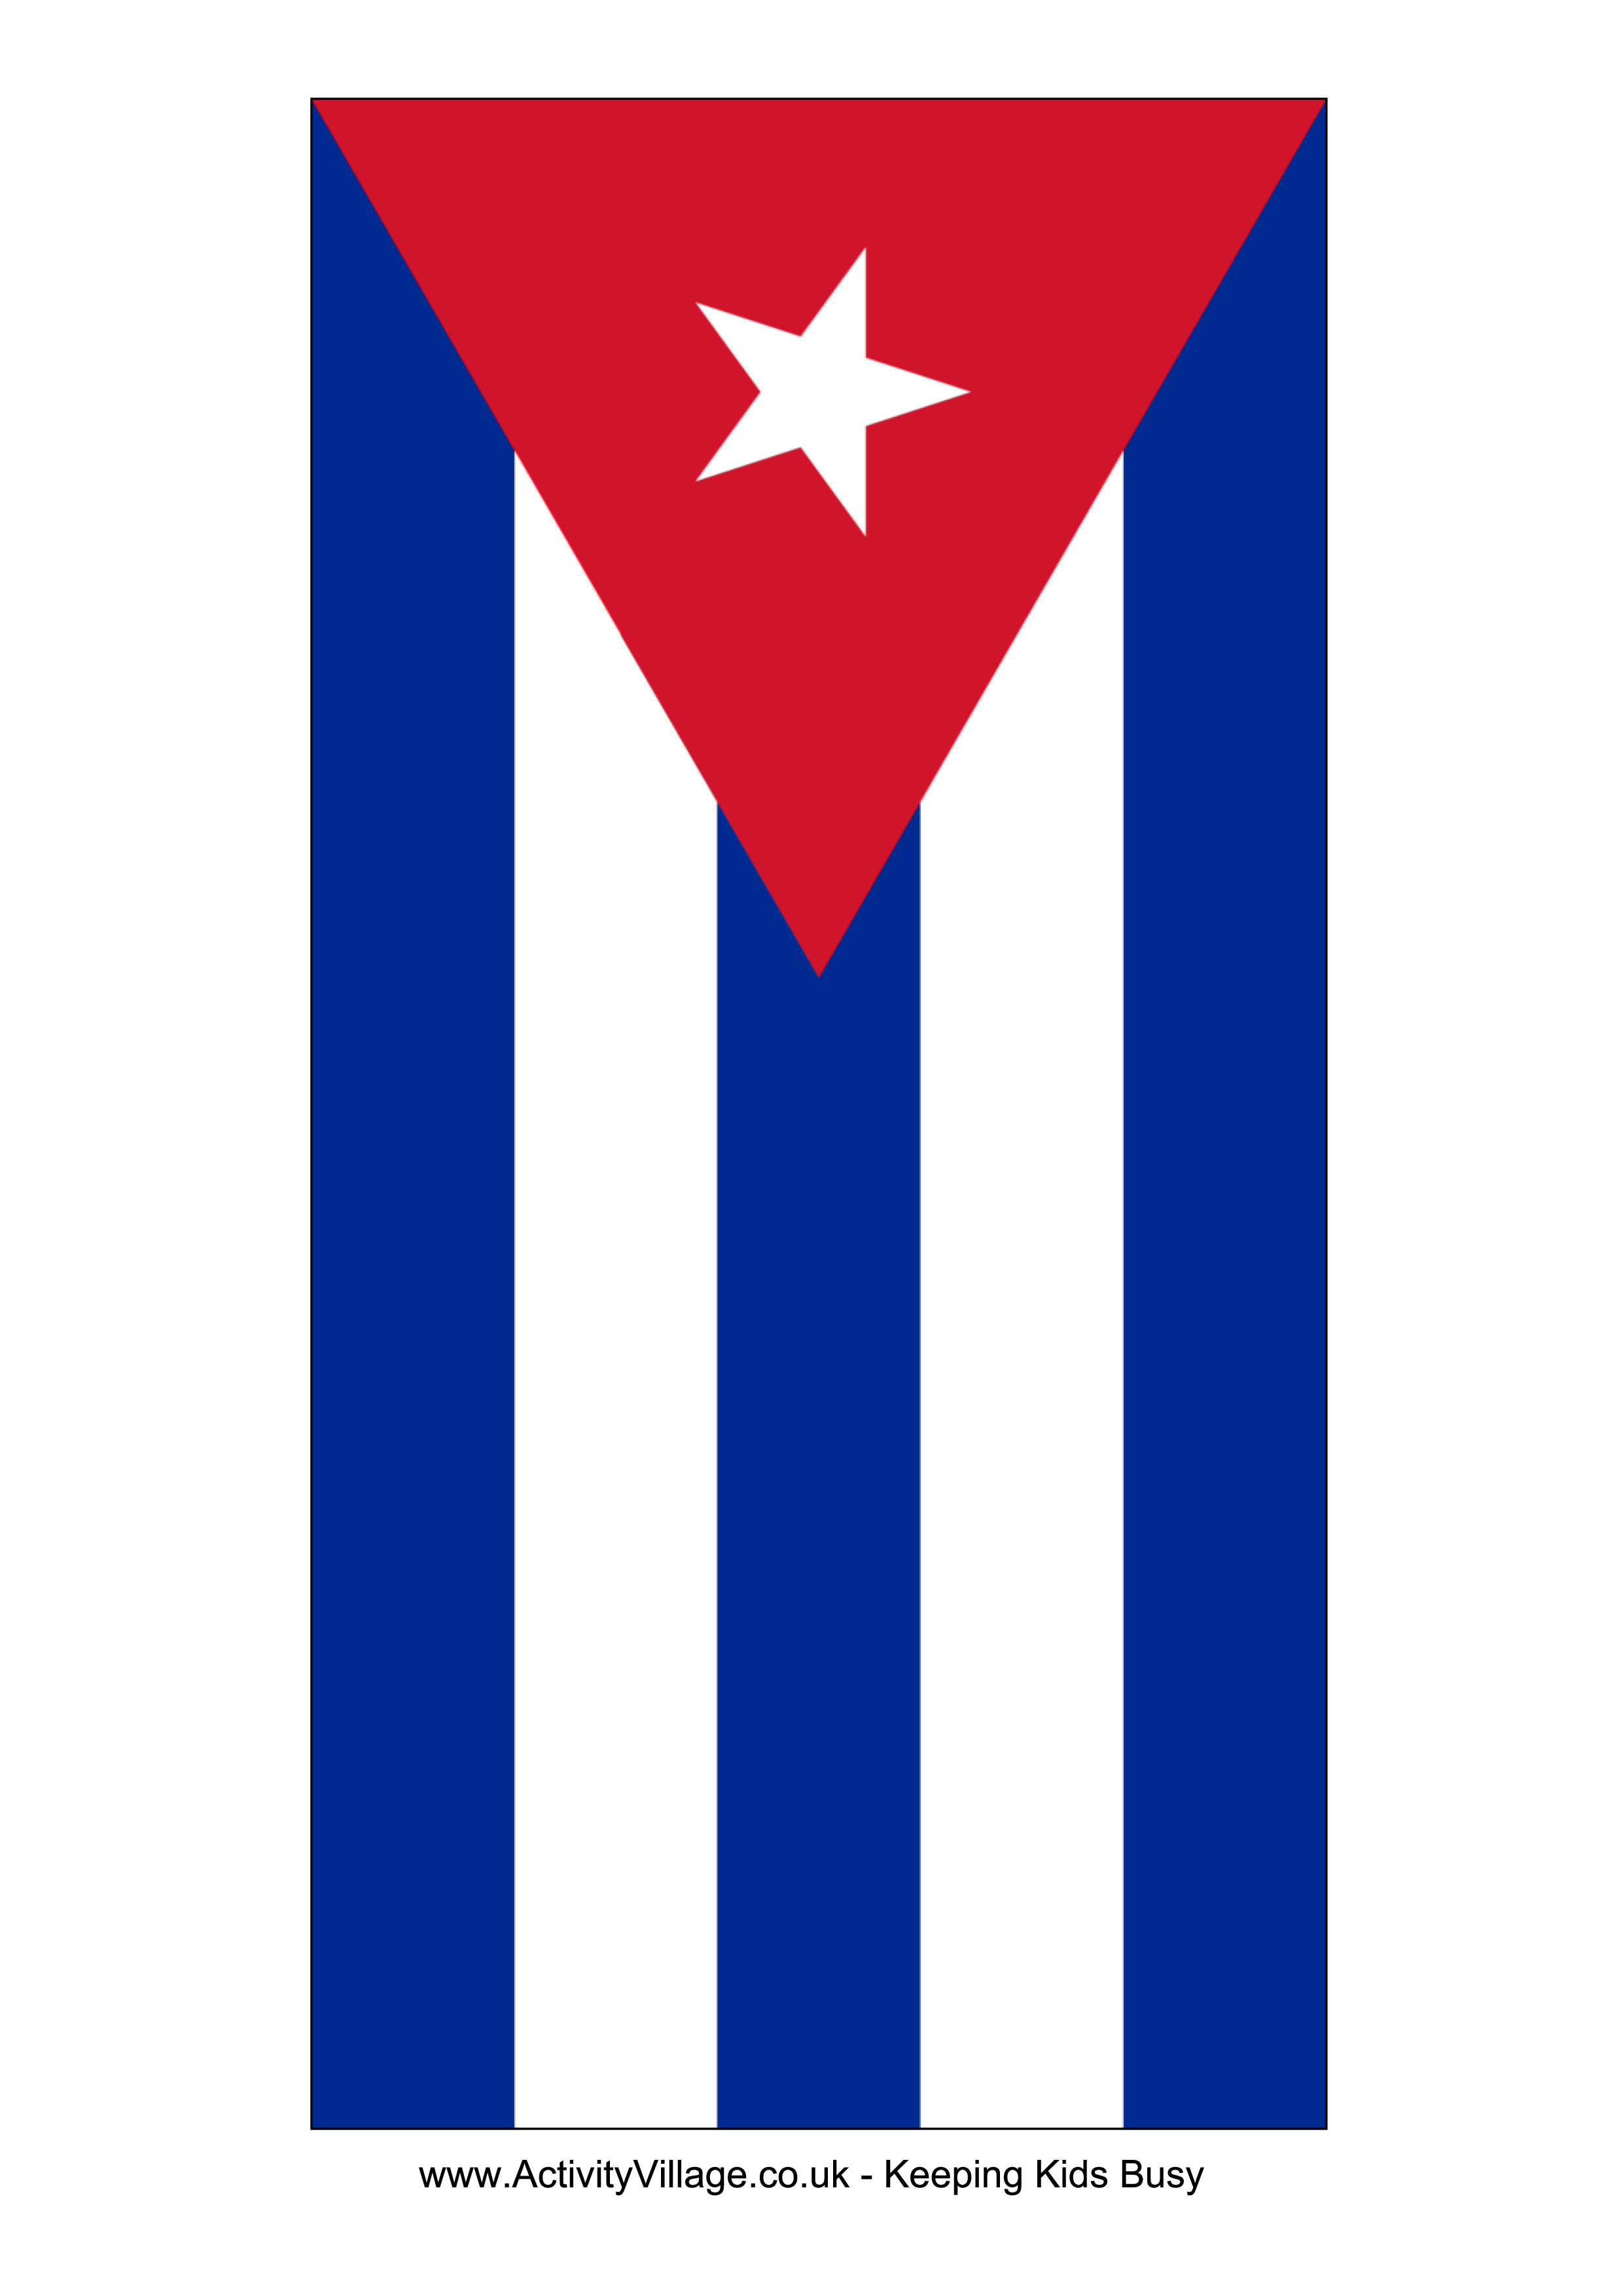 Cuba Flag main image